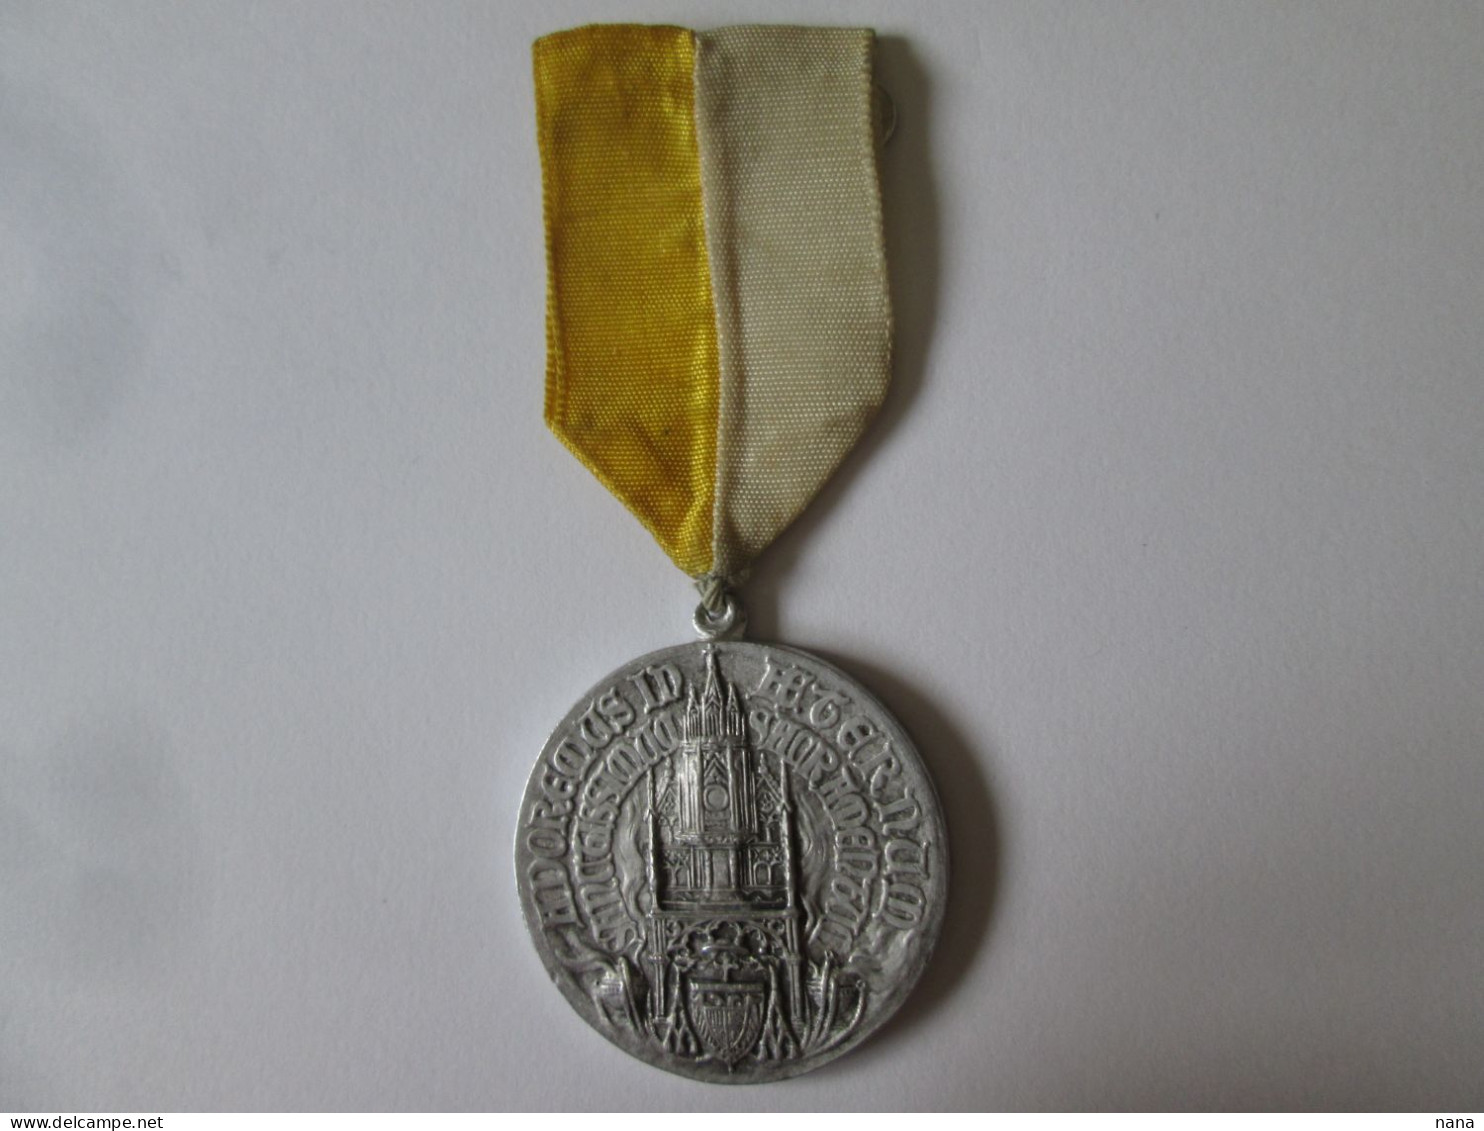 Espagna Medaille Congress Eucharistic A Barcelona 1944/Spain Medal Eucharistic Congress Barcelona 1944 - España